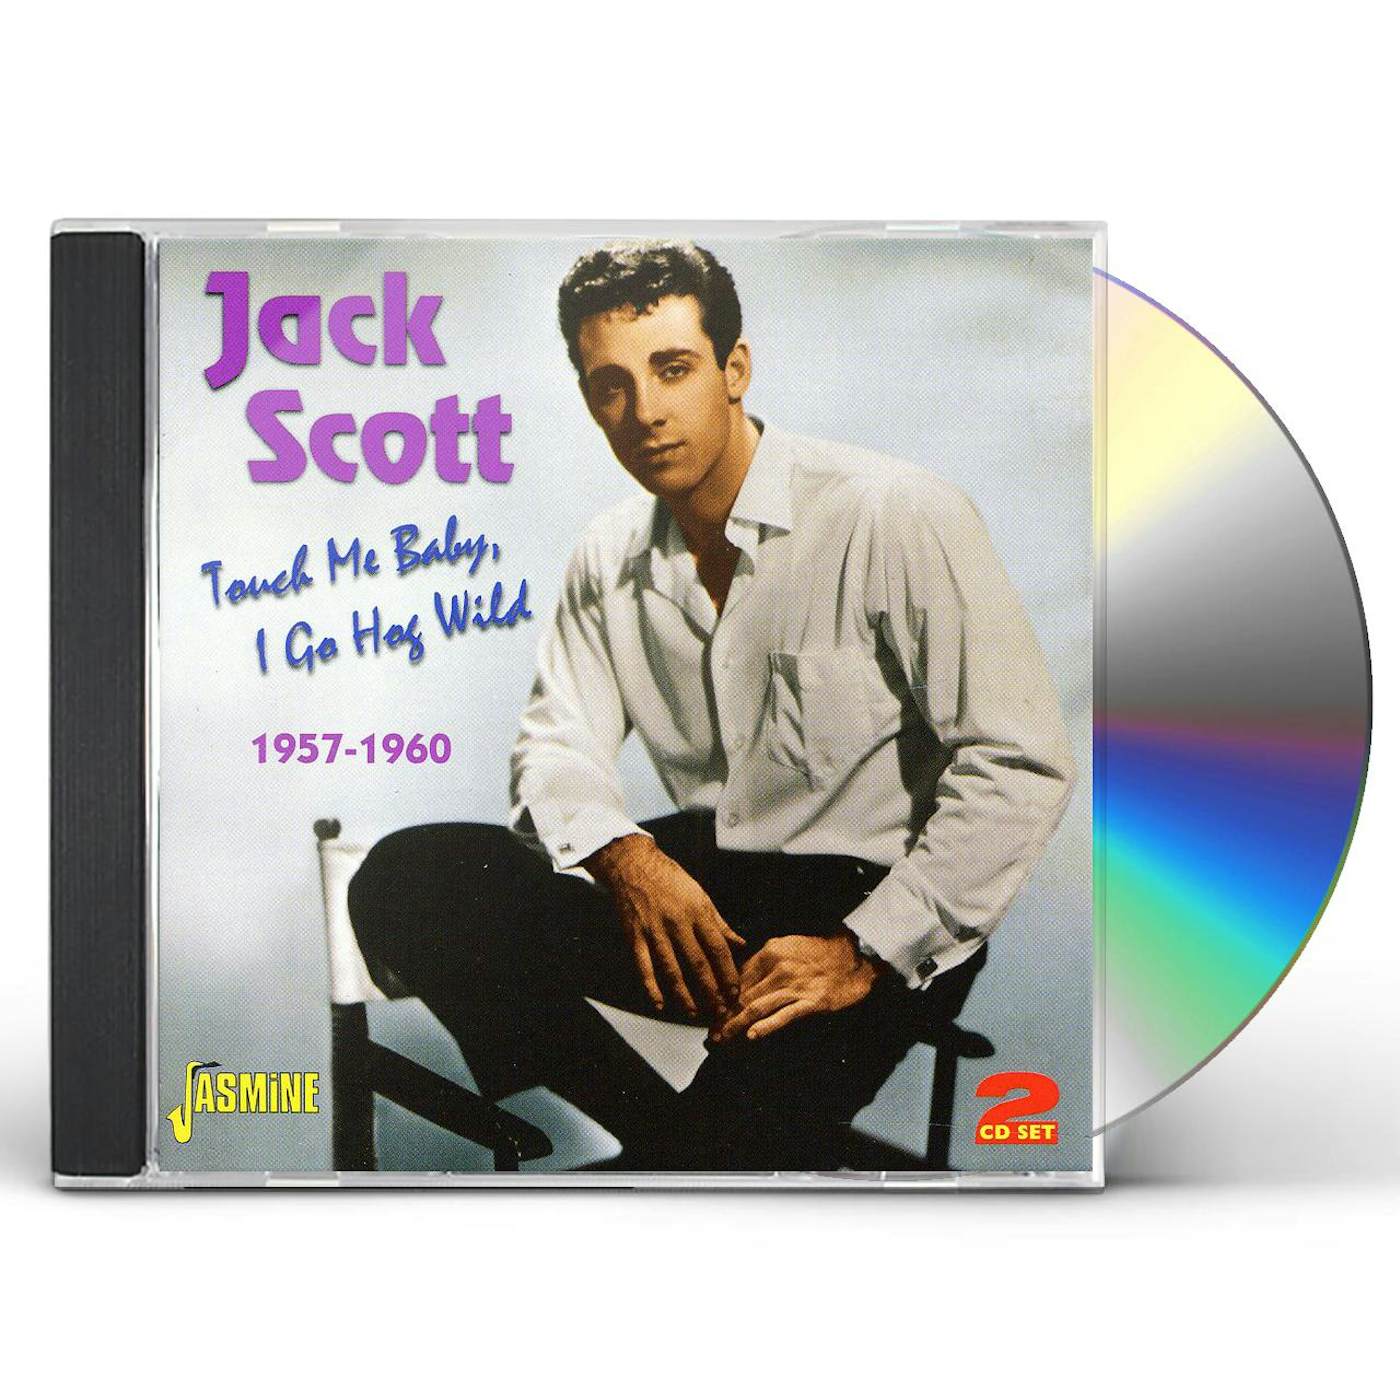 Jack Scott TOUCH ME BABY I GO HOG WILD 1957 - 1960 CD